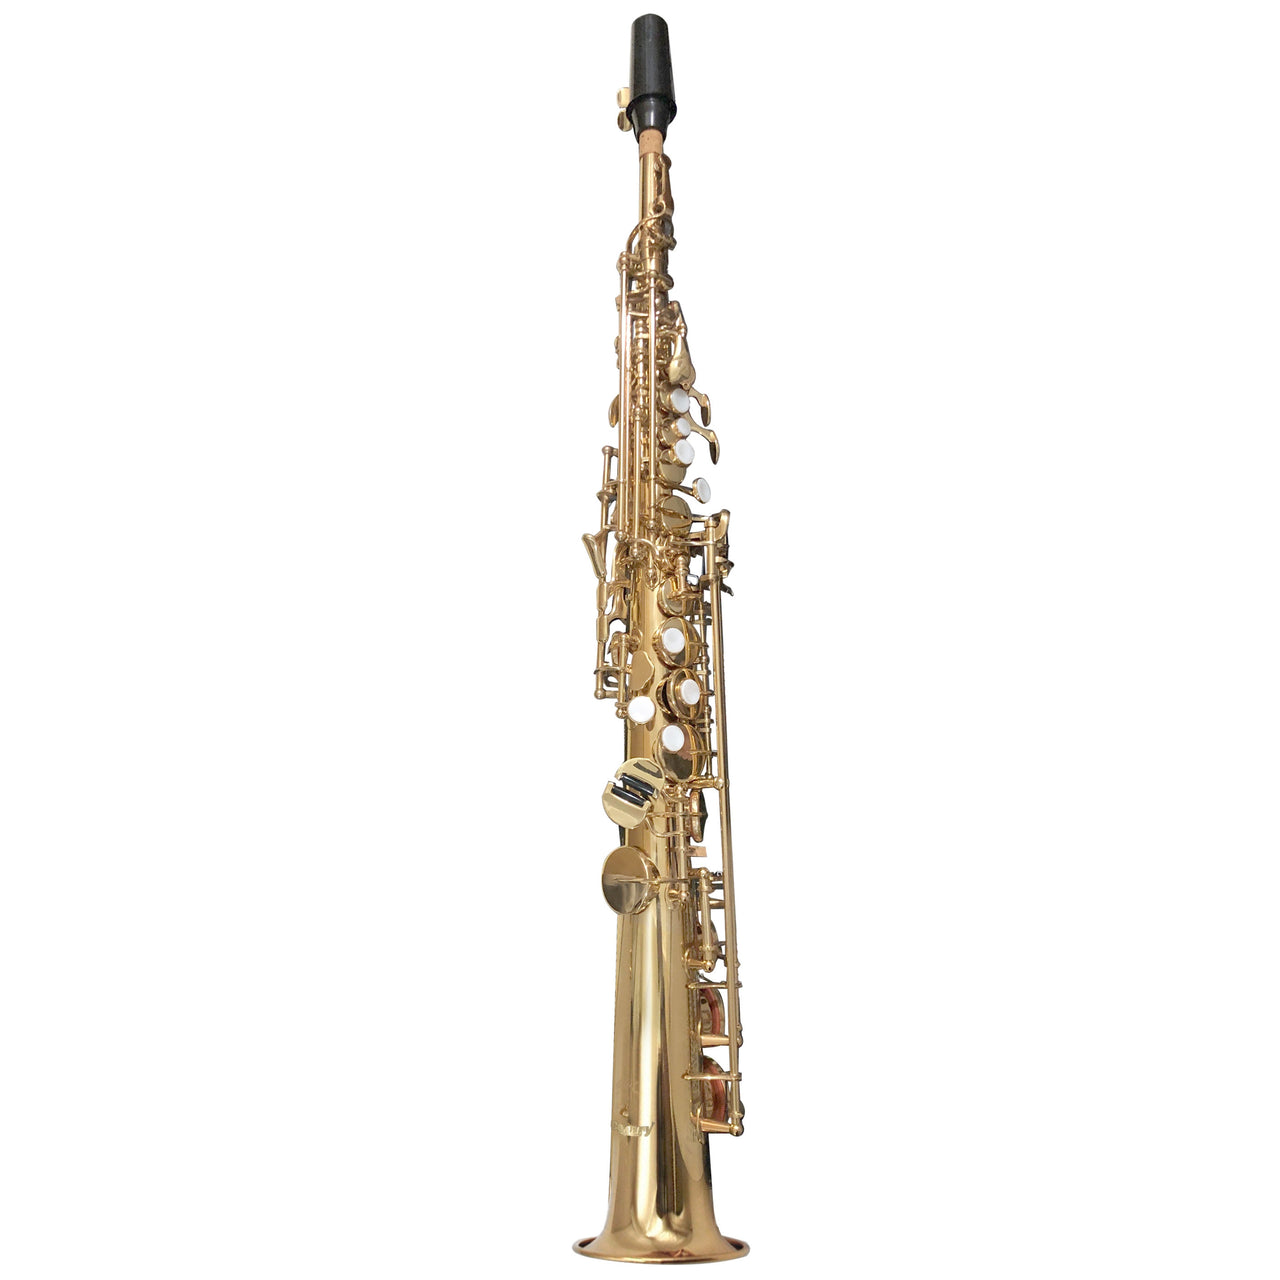 Saxofon Soprano Century Cnsx004 Recto Sib Dorado T-400r